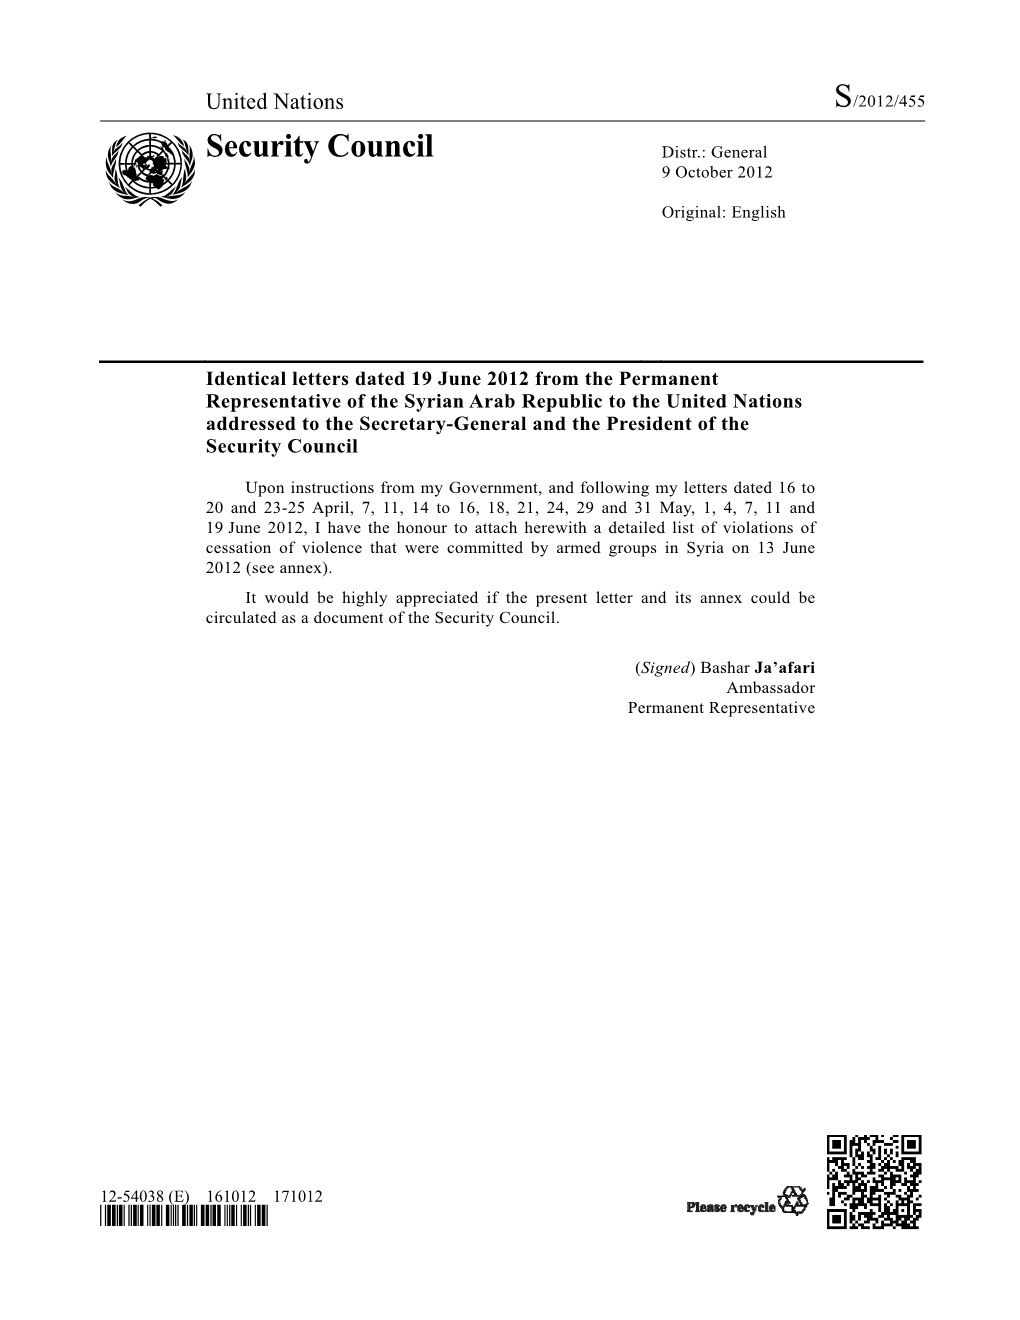 Security Council Distr.: General 9 October 2012